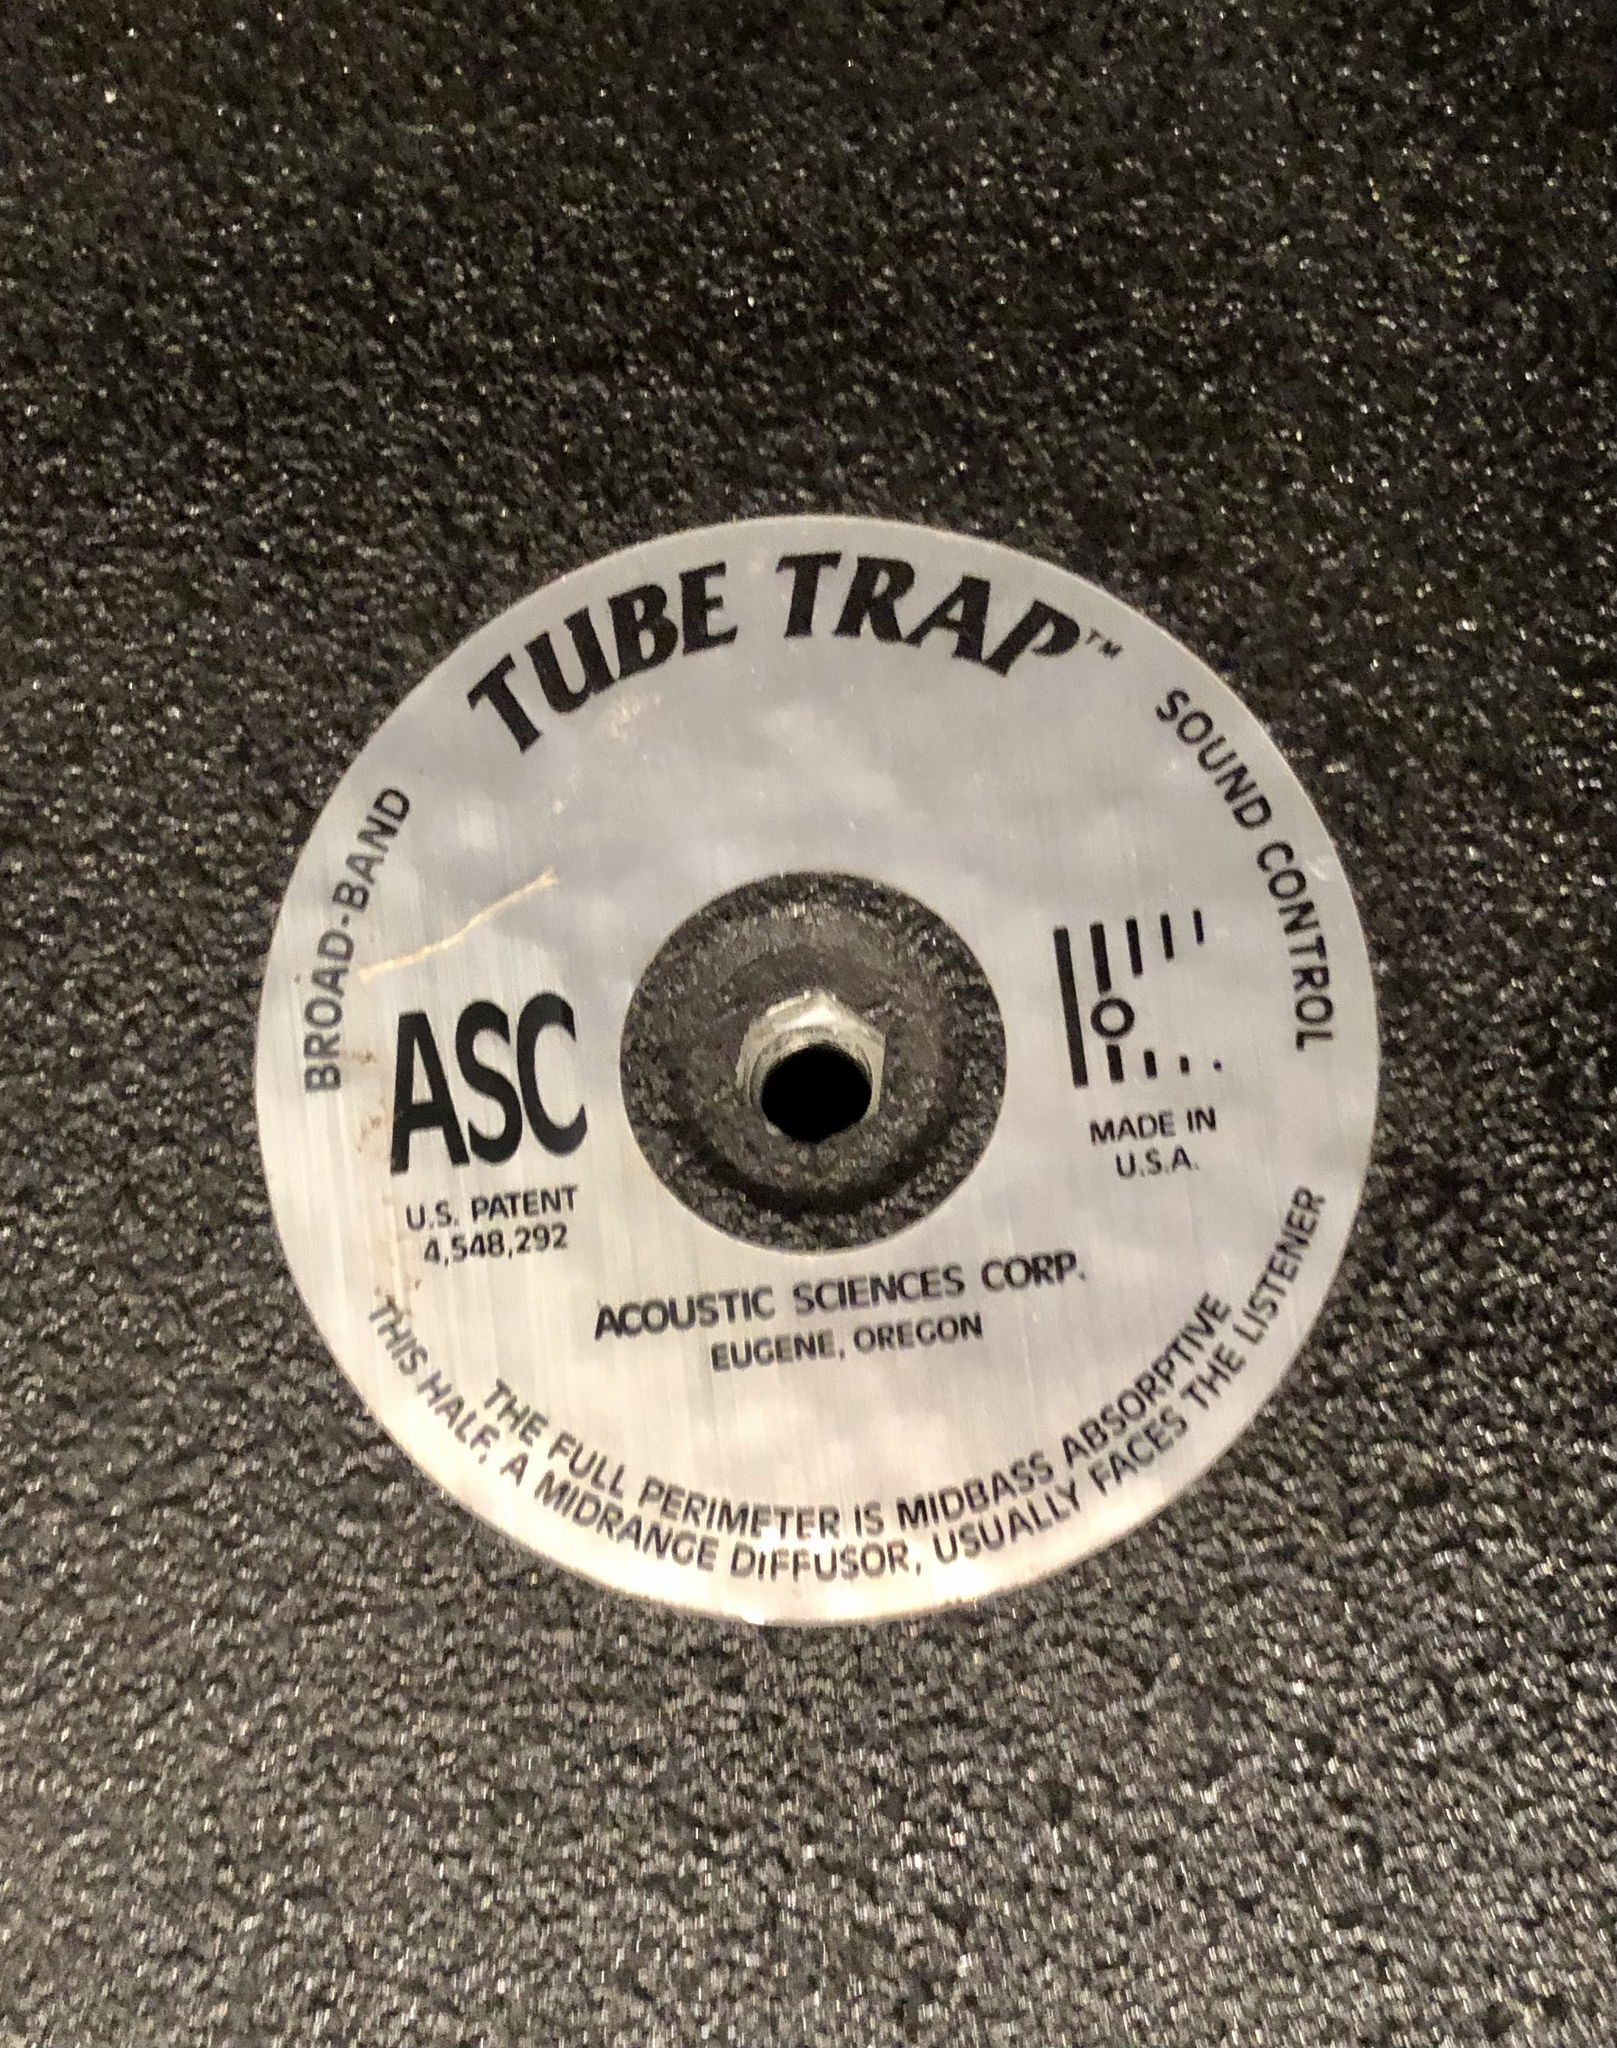 Two (2) ASC Tubetrap - 16” x 48" 2